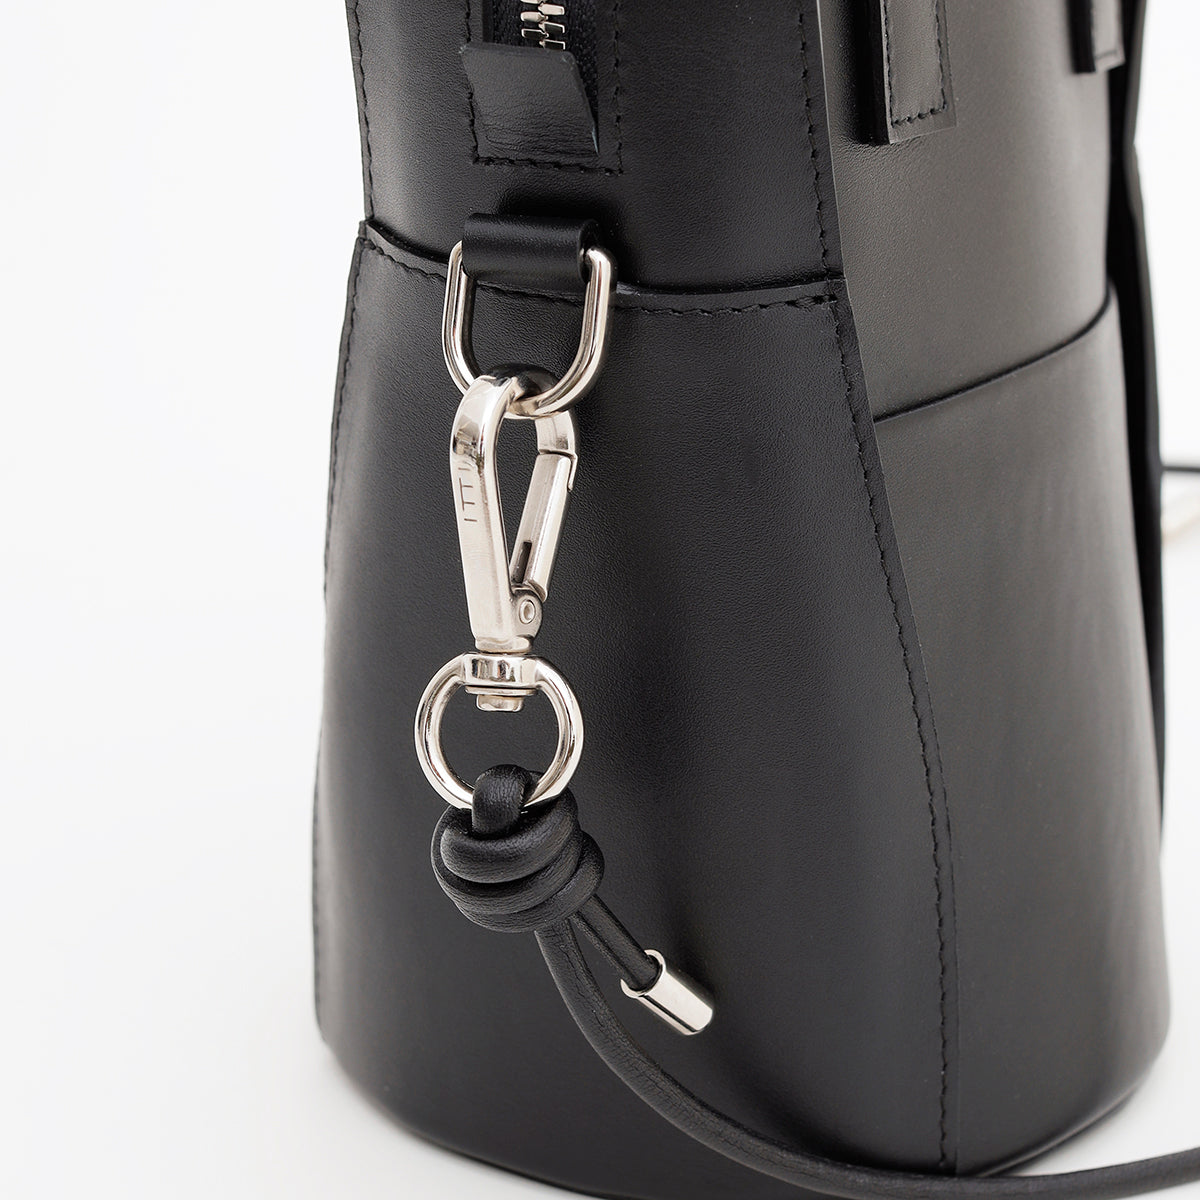 ITTI (イッチ) | HERRIE BALLER'S BAG / RAPTO(ヘリーボーラーズバッグ/ラプト) | レザー ショルダー バッグ かばん 鞄 カバン ユニセックス メンズ レディース ブランド